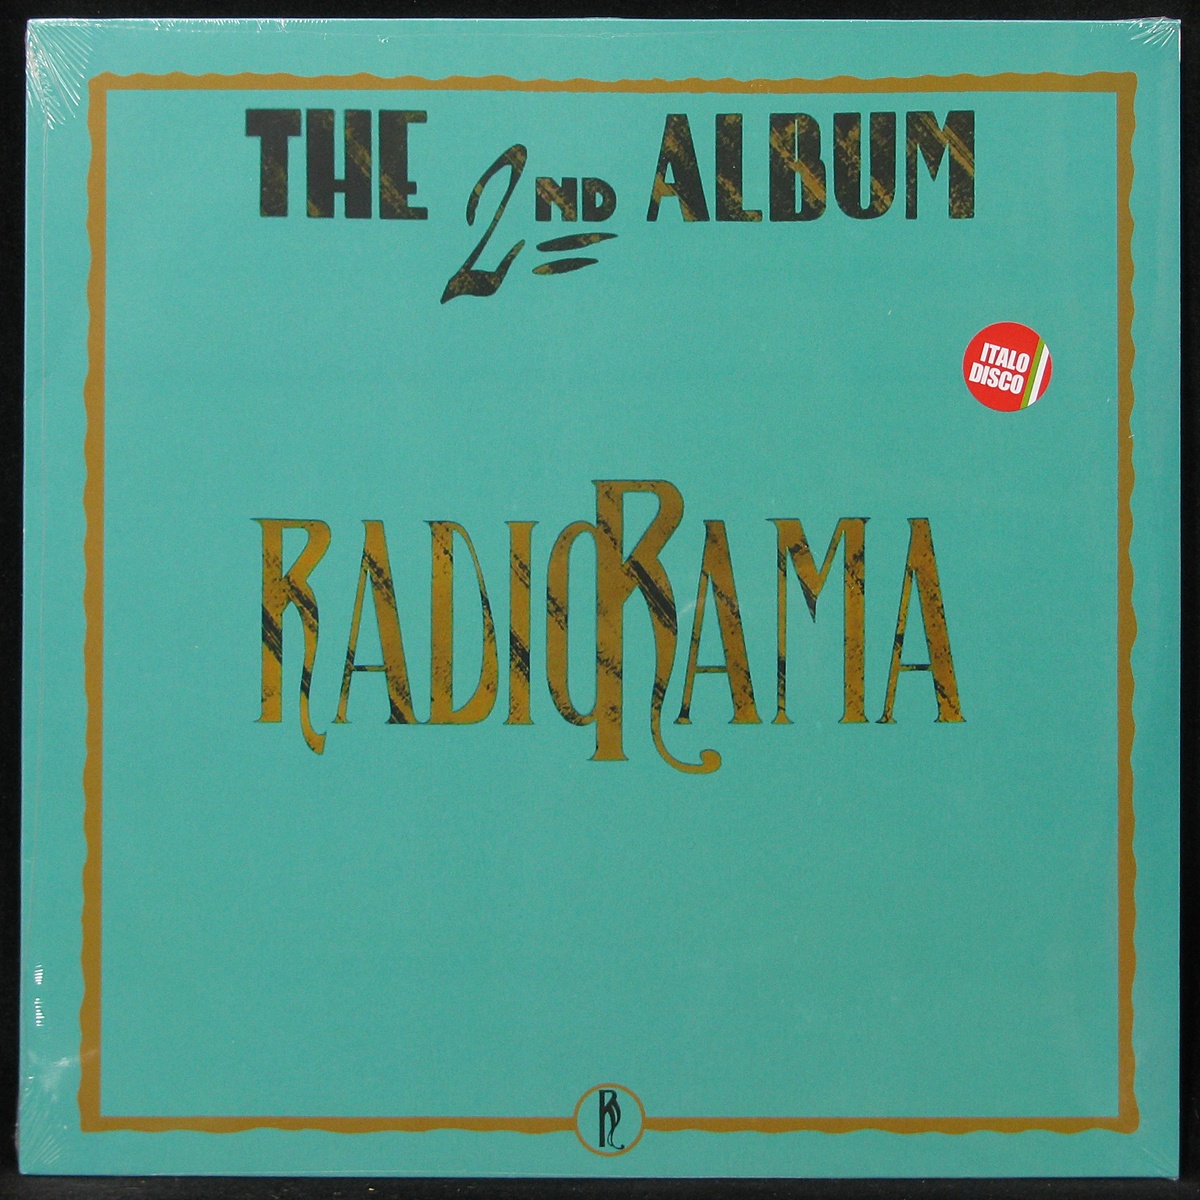 LP Radiorama — 2nd Album фото